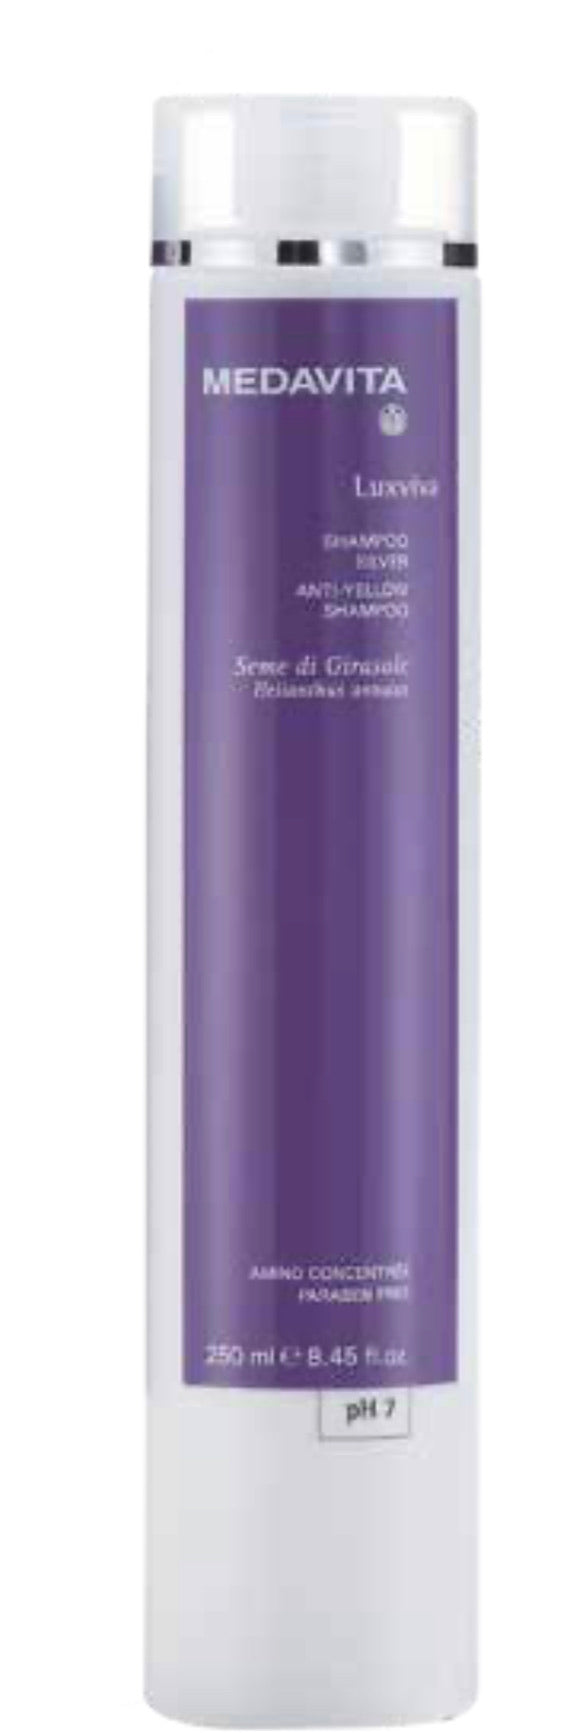 Luxviva Shampooing Violet 250ml - by Medavita |ProCare Outlet|